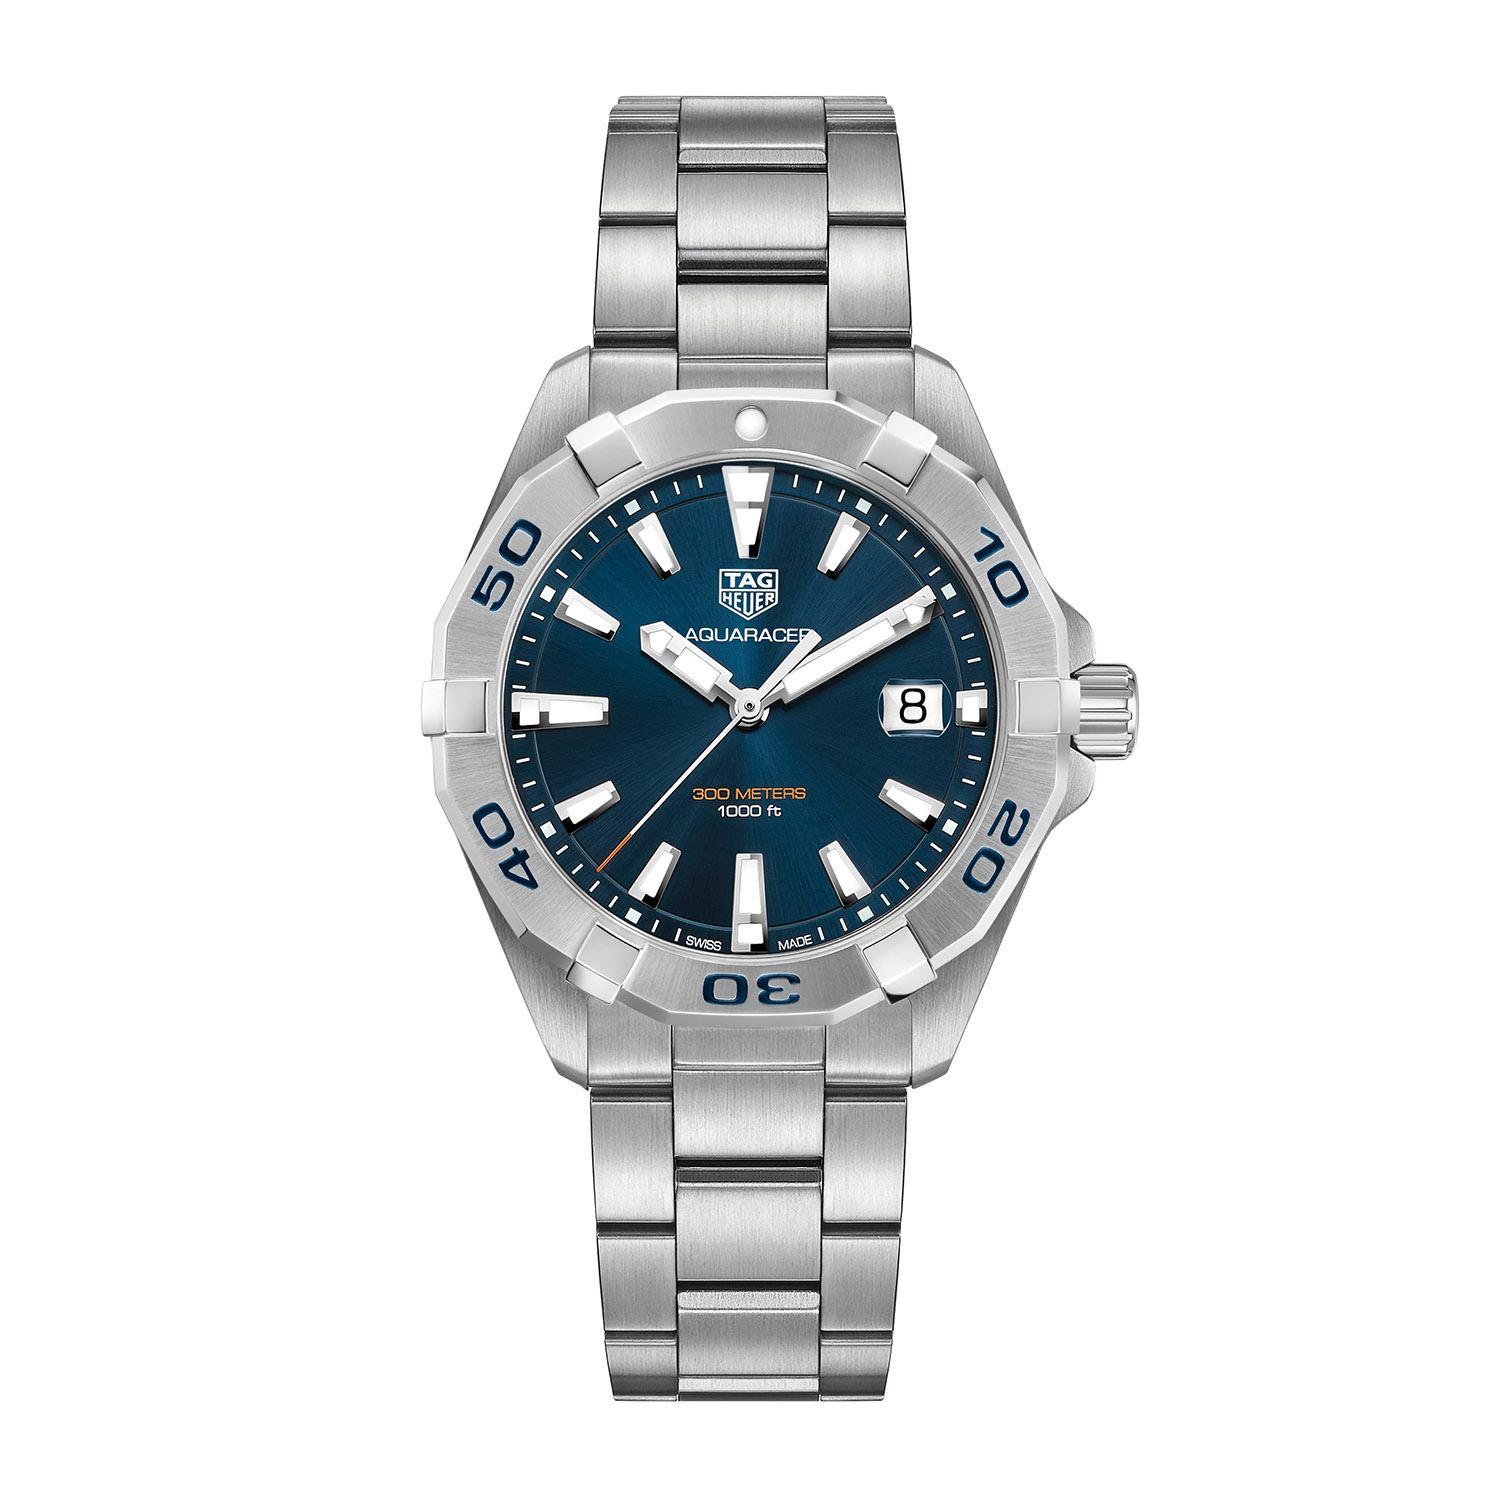 Gents Tag Heuer Aquaracer Timepiece